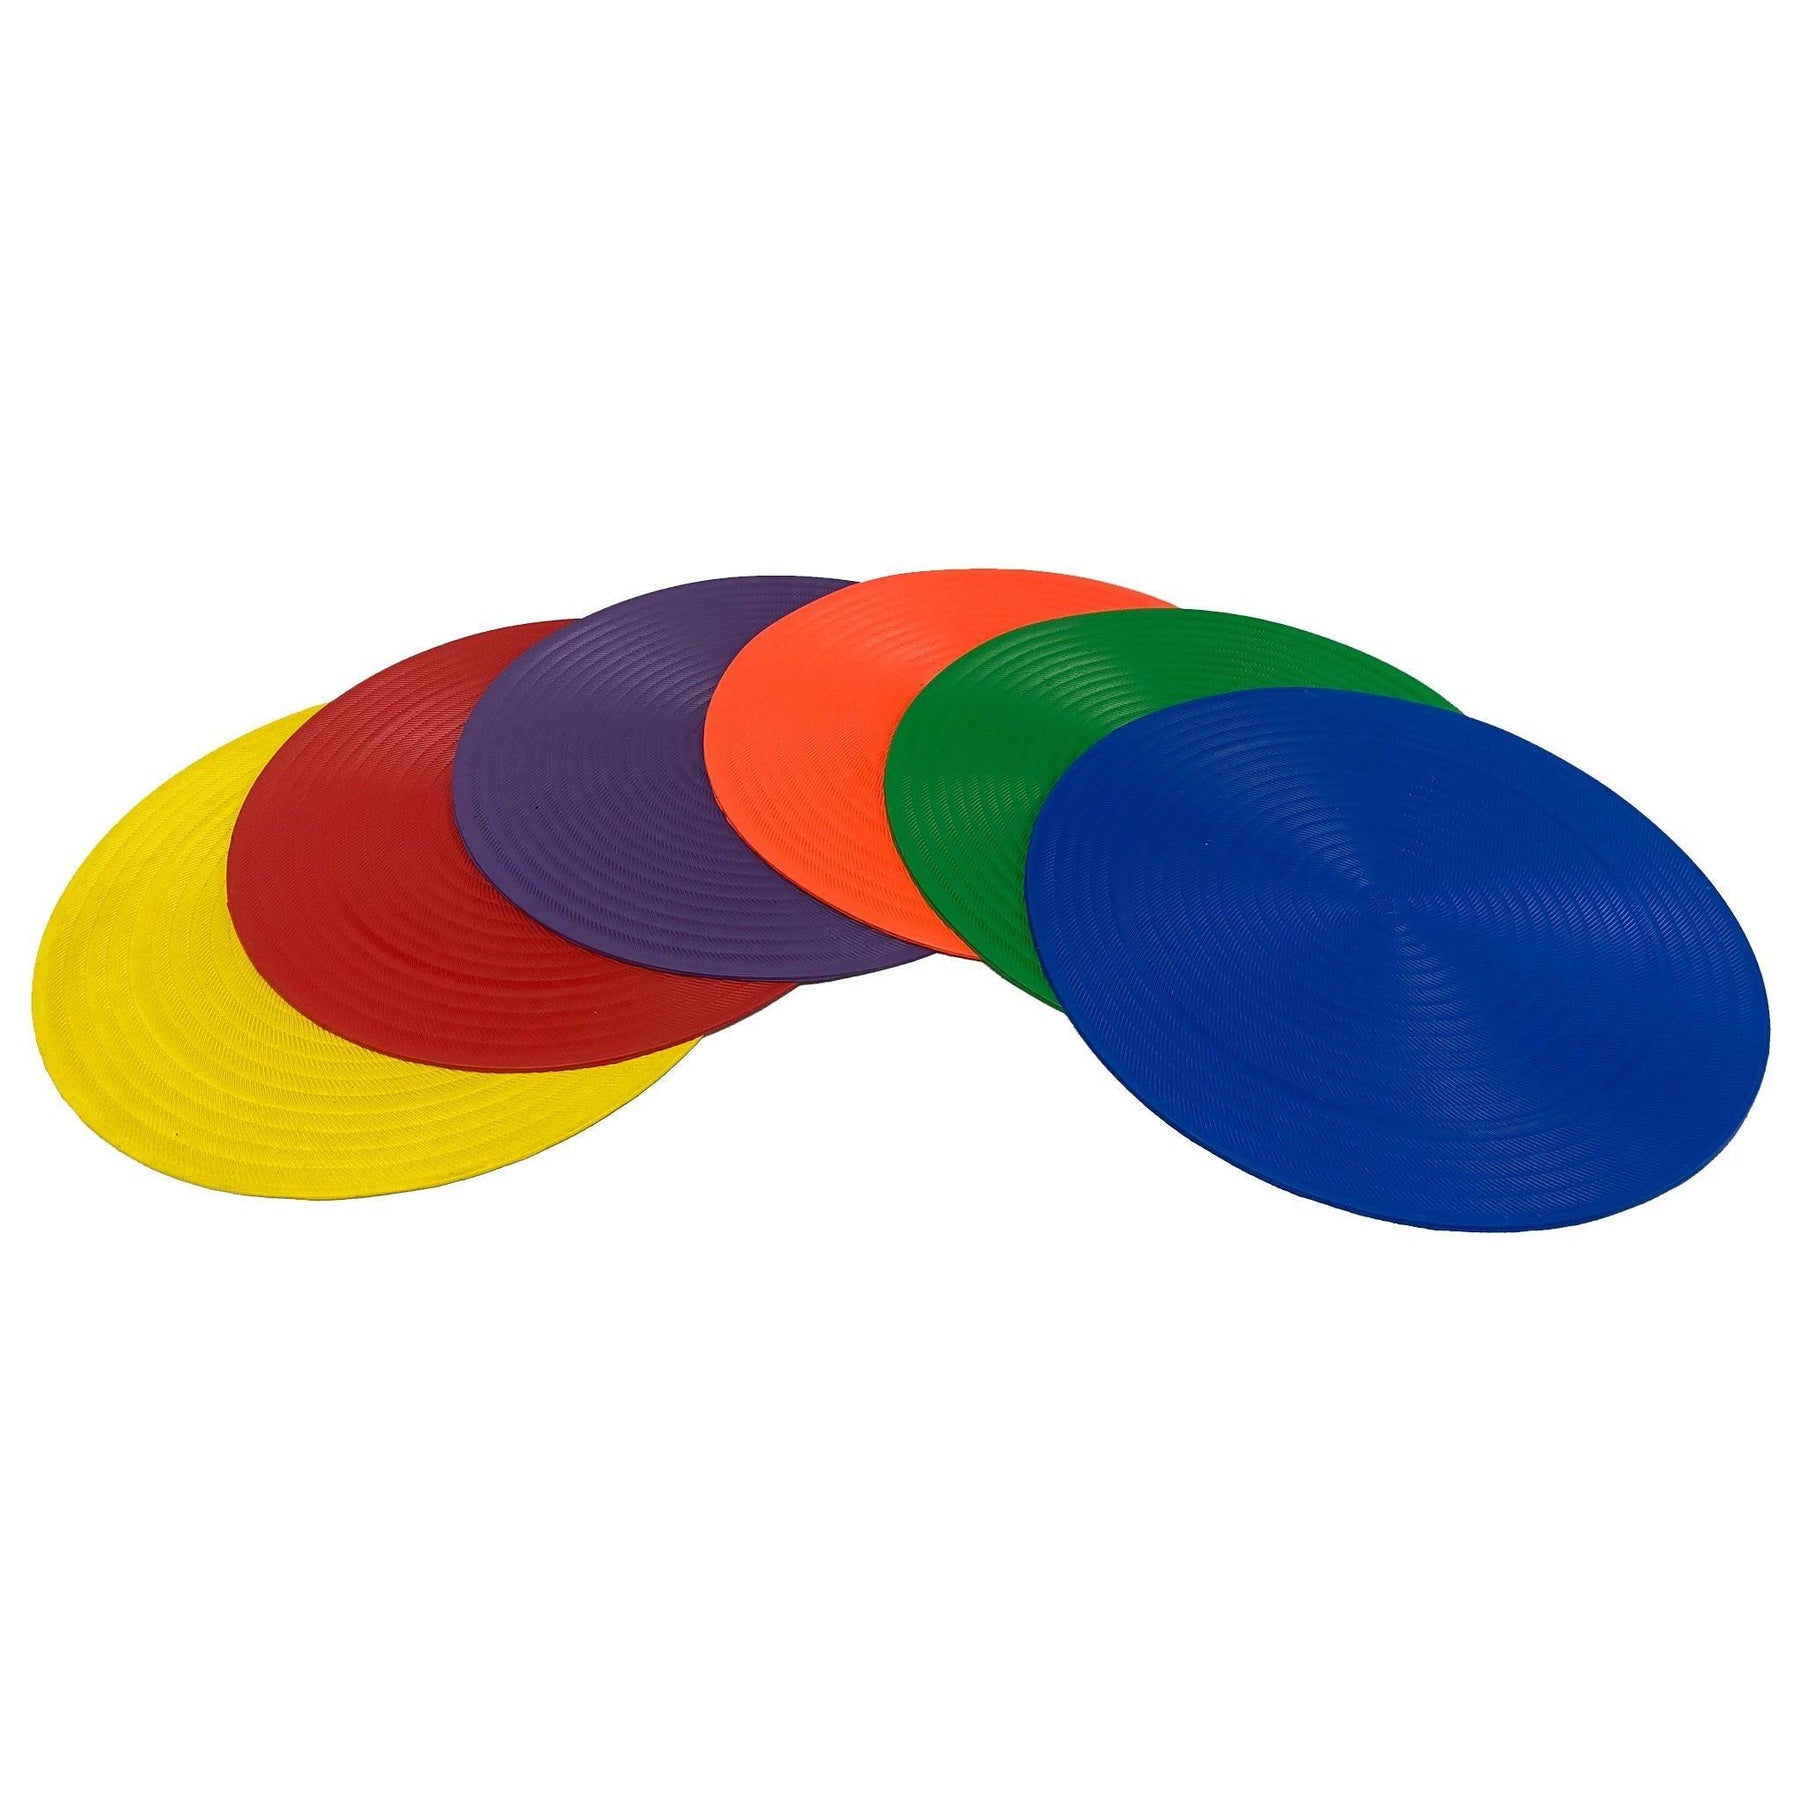 Marking Spot Discs (set of 6) - Nordic Sport Australia Pty Ltd